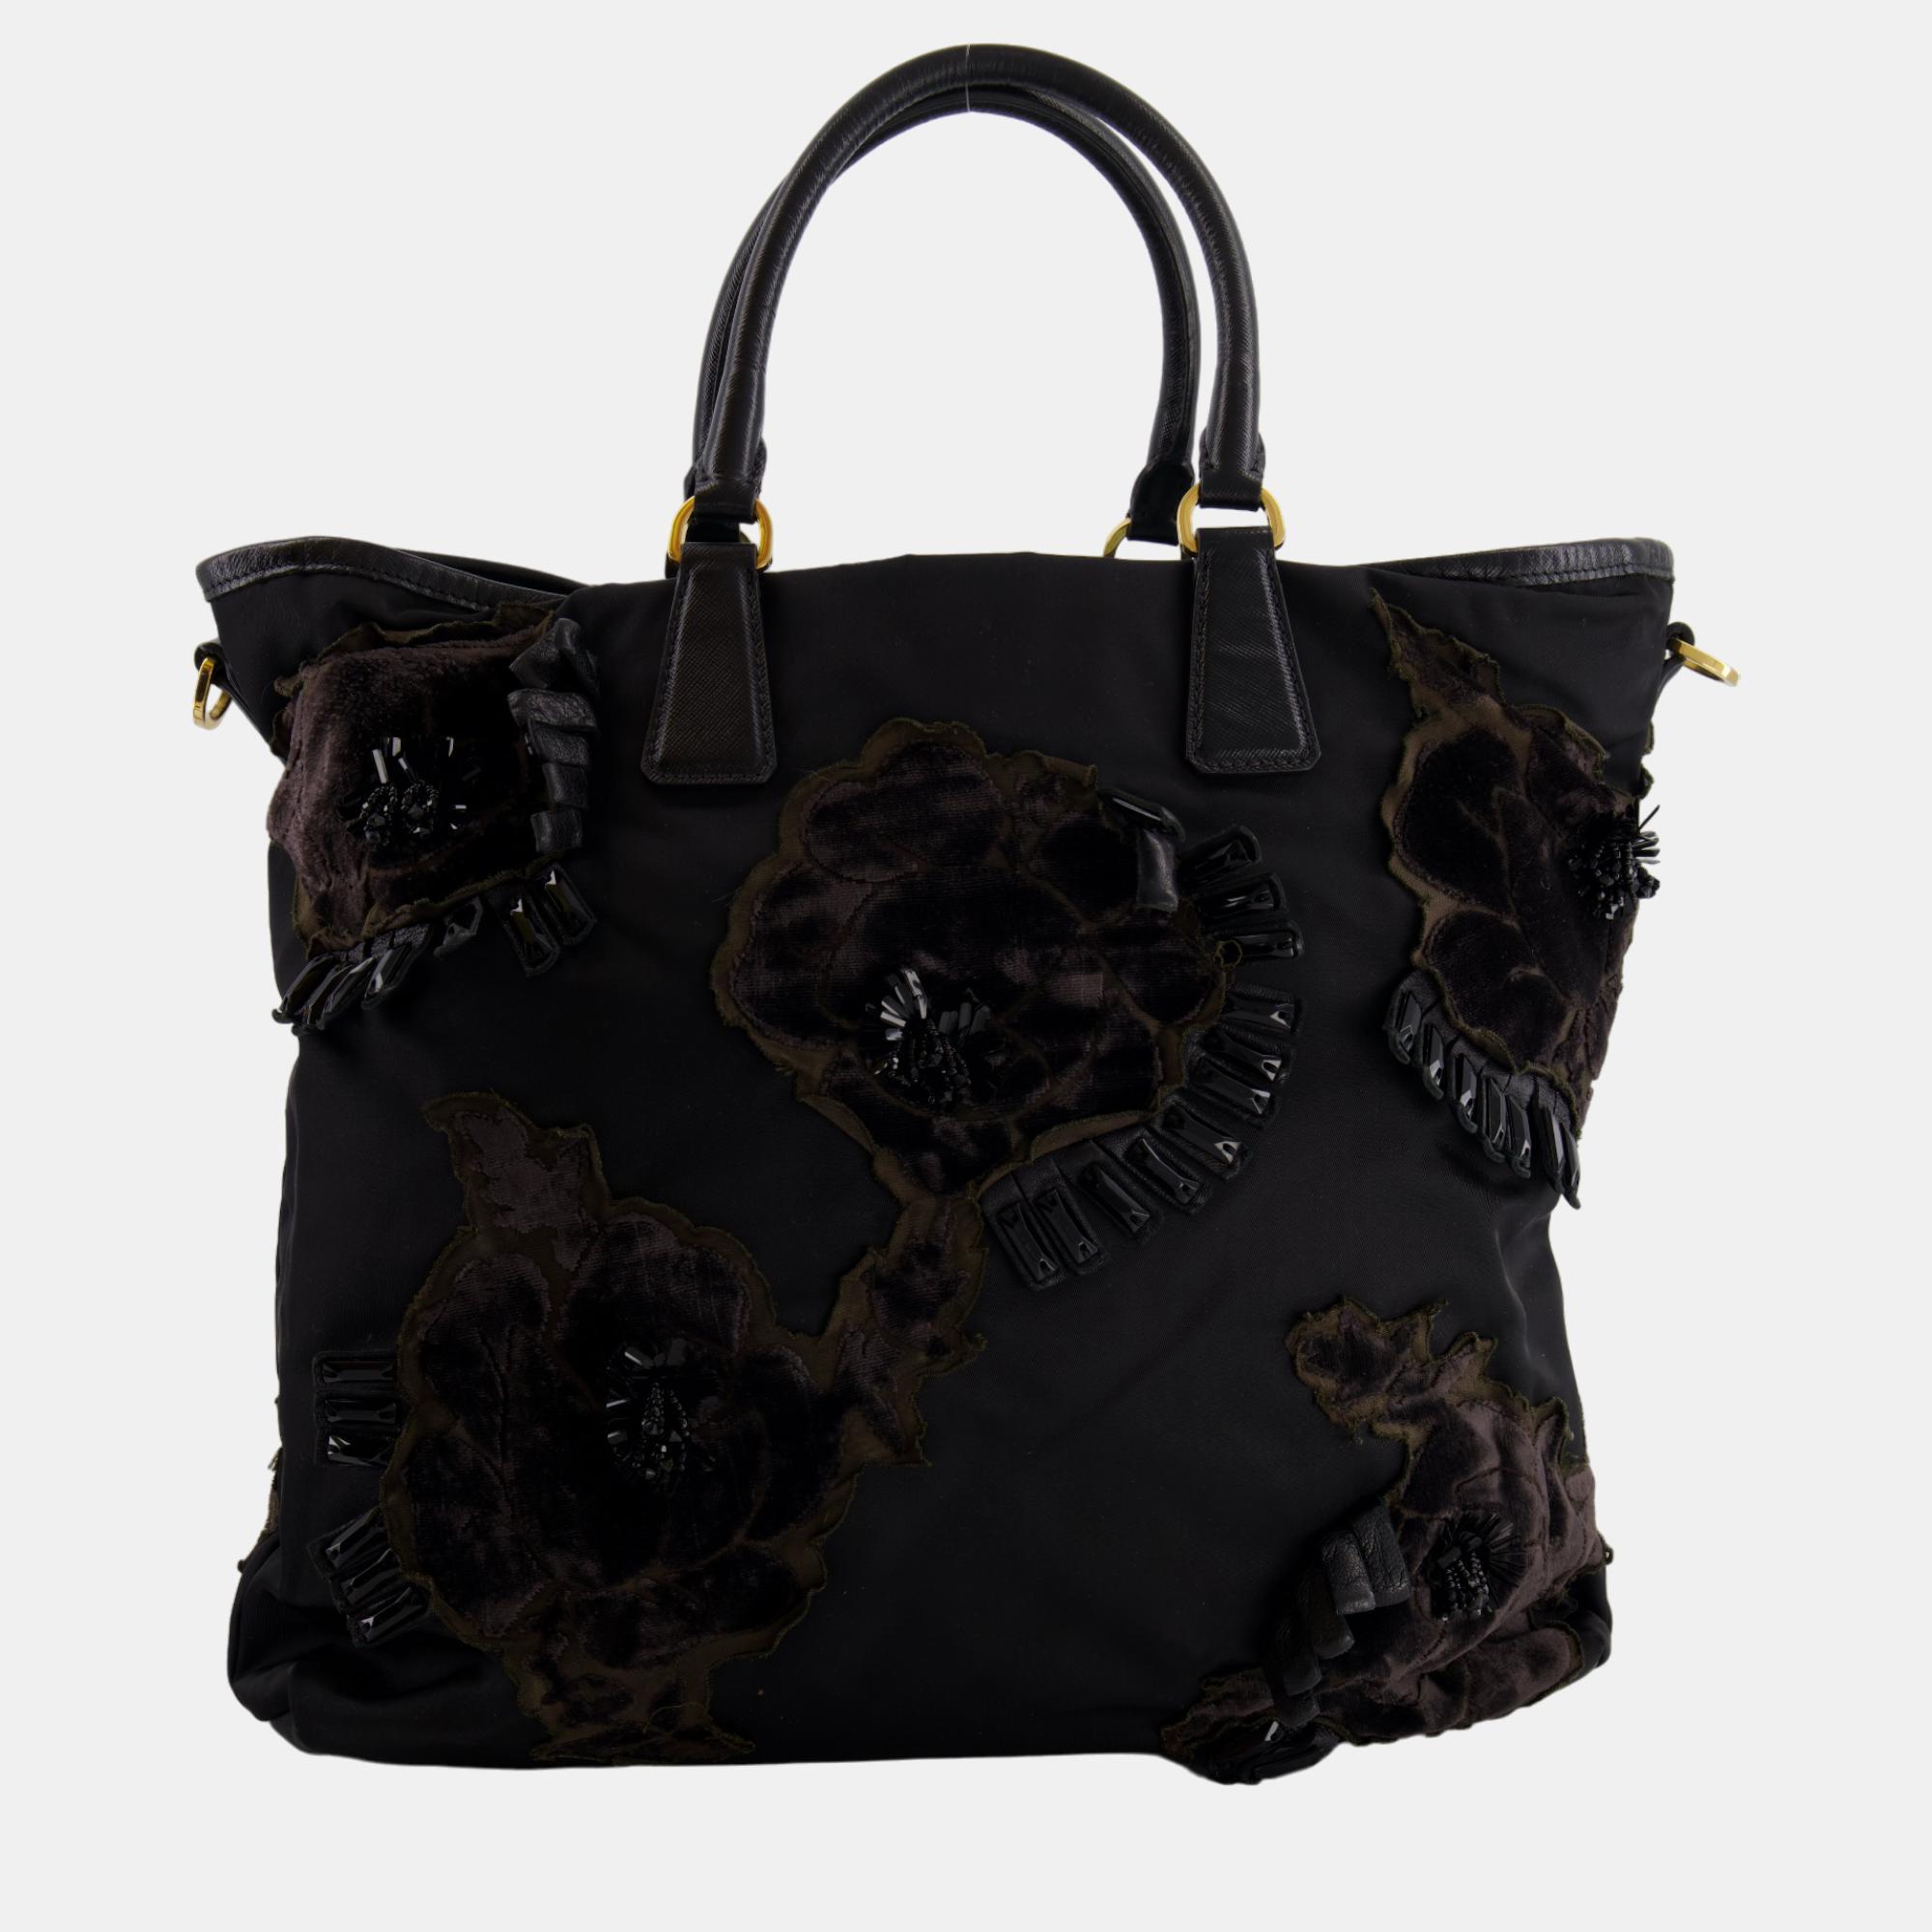 Prada Black Nylon Tote Bag With Gold Hardware, Velvet And Crystal Embroideries